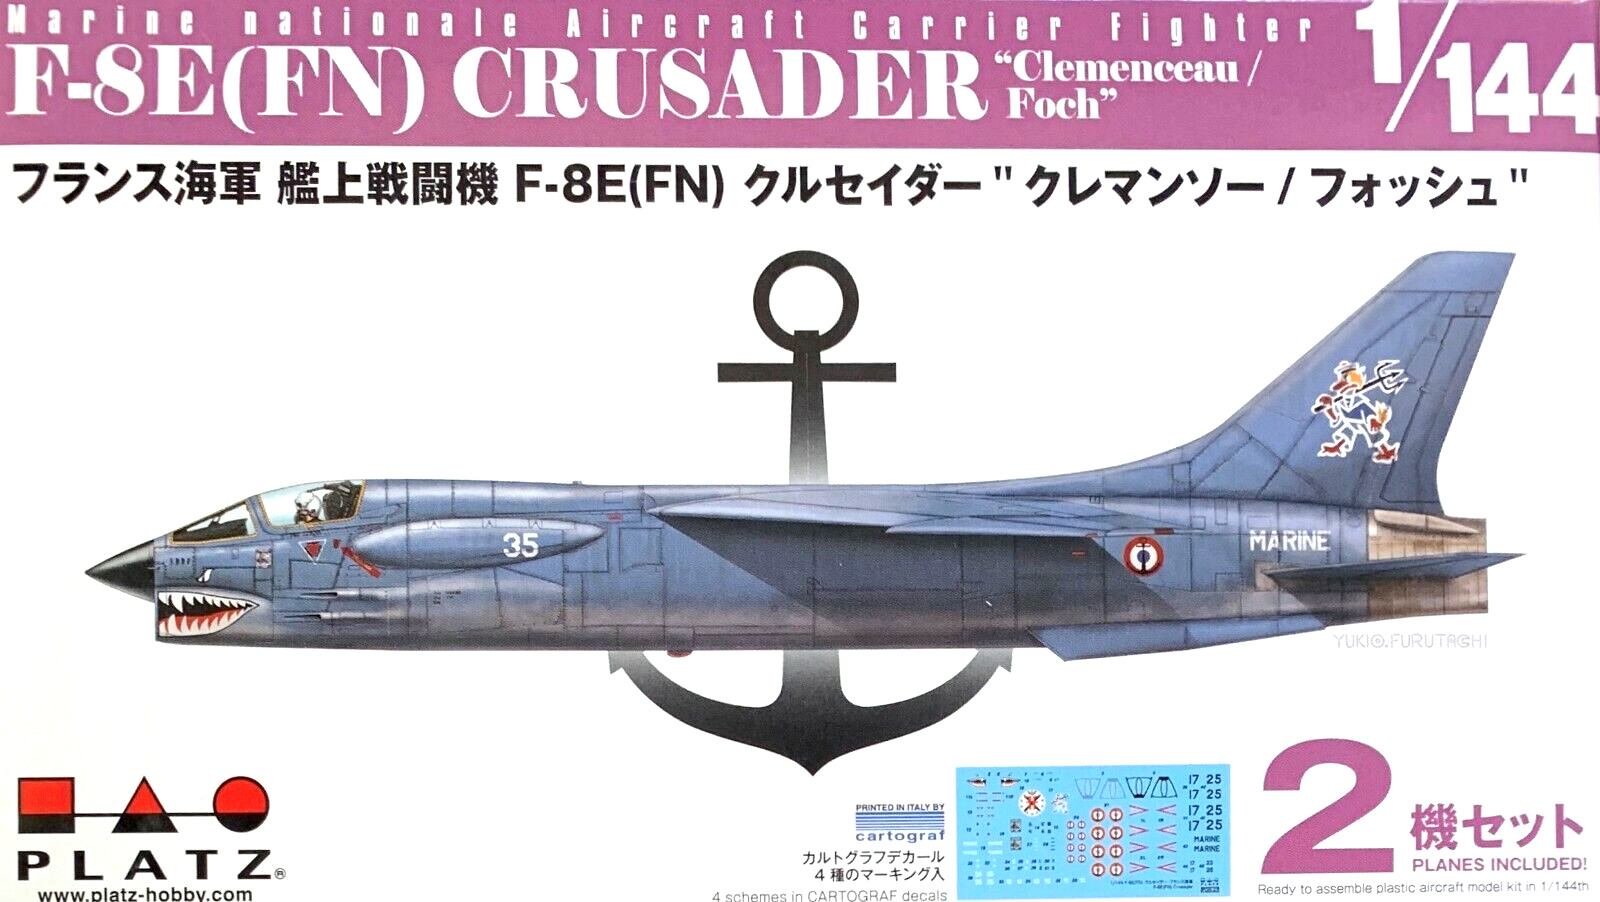 1/144 Fighter: Vought F-8E(FN) Crusader 2in1 [France Navy] #PDR27: PLATZ